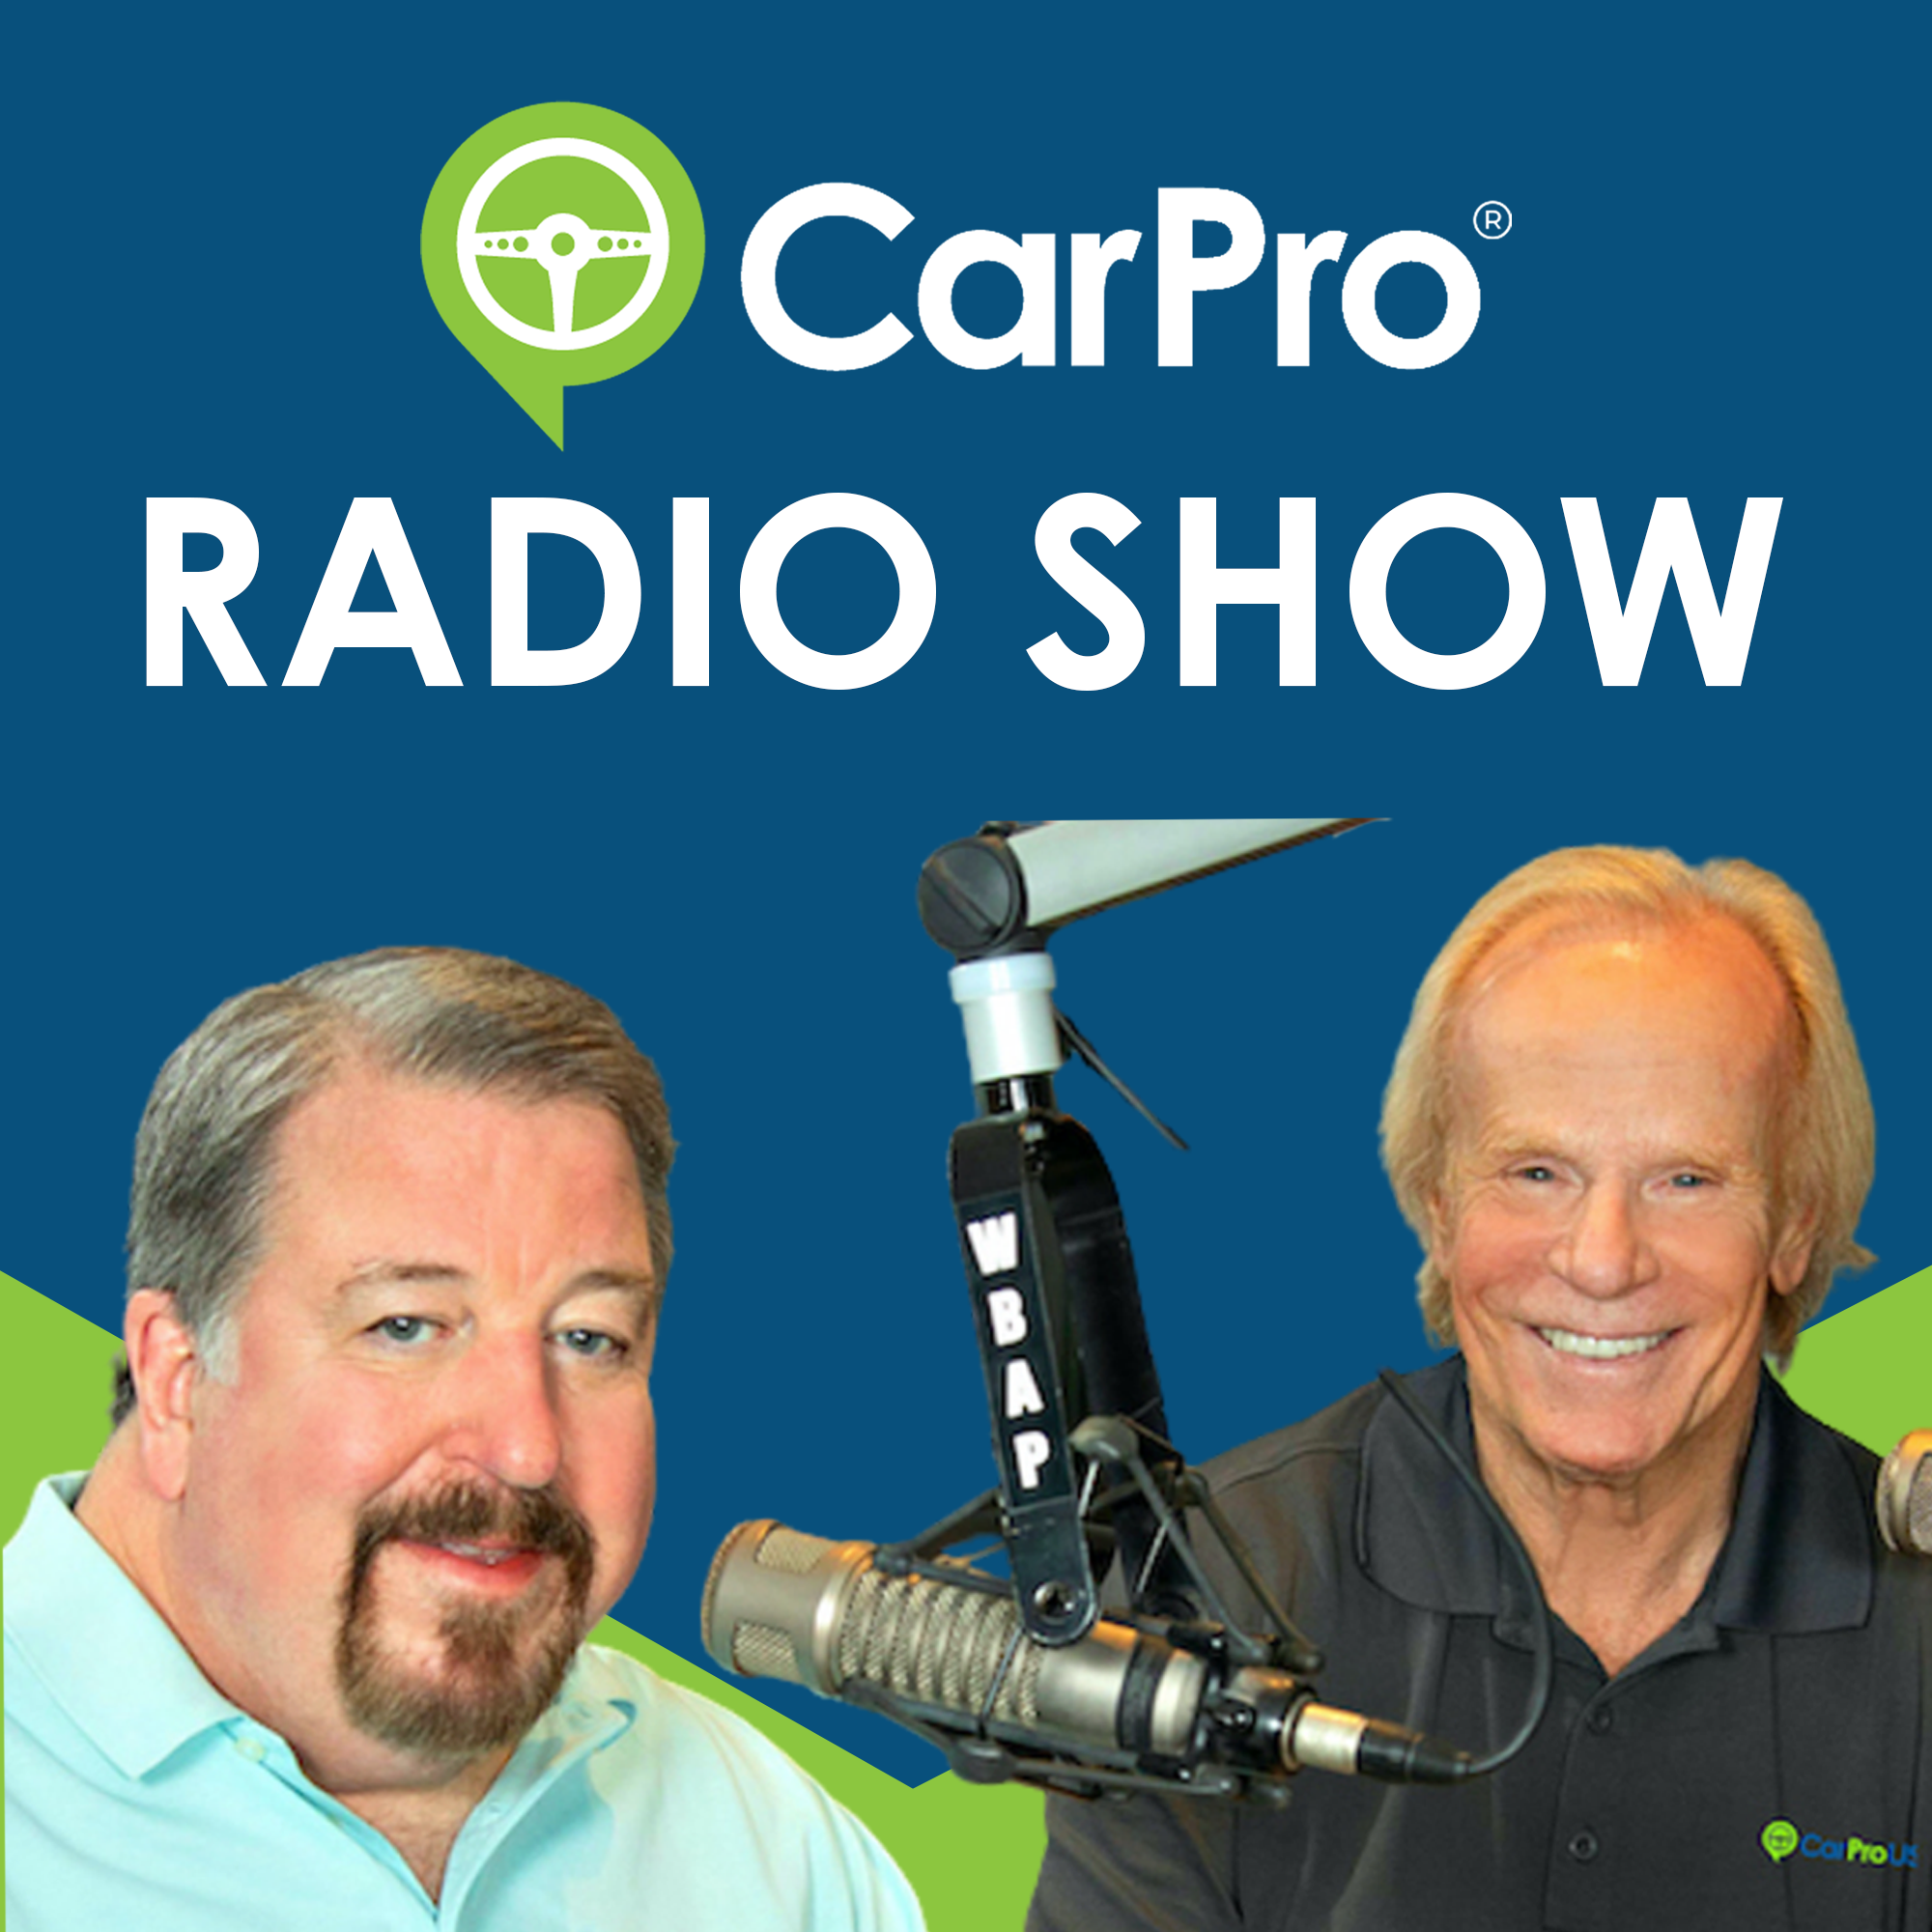 carpro radio show podcast hosts